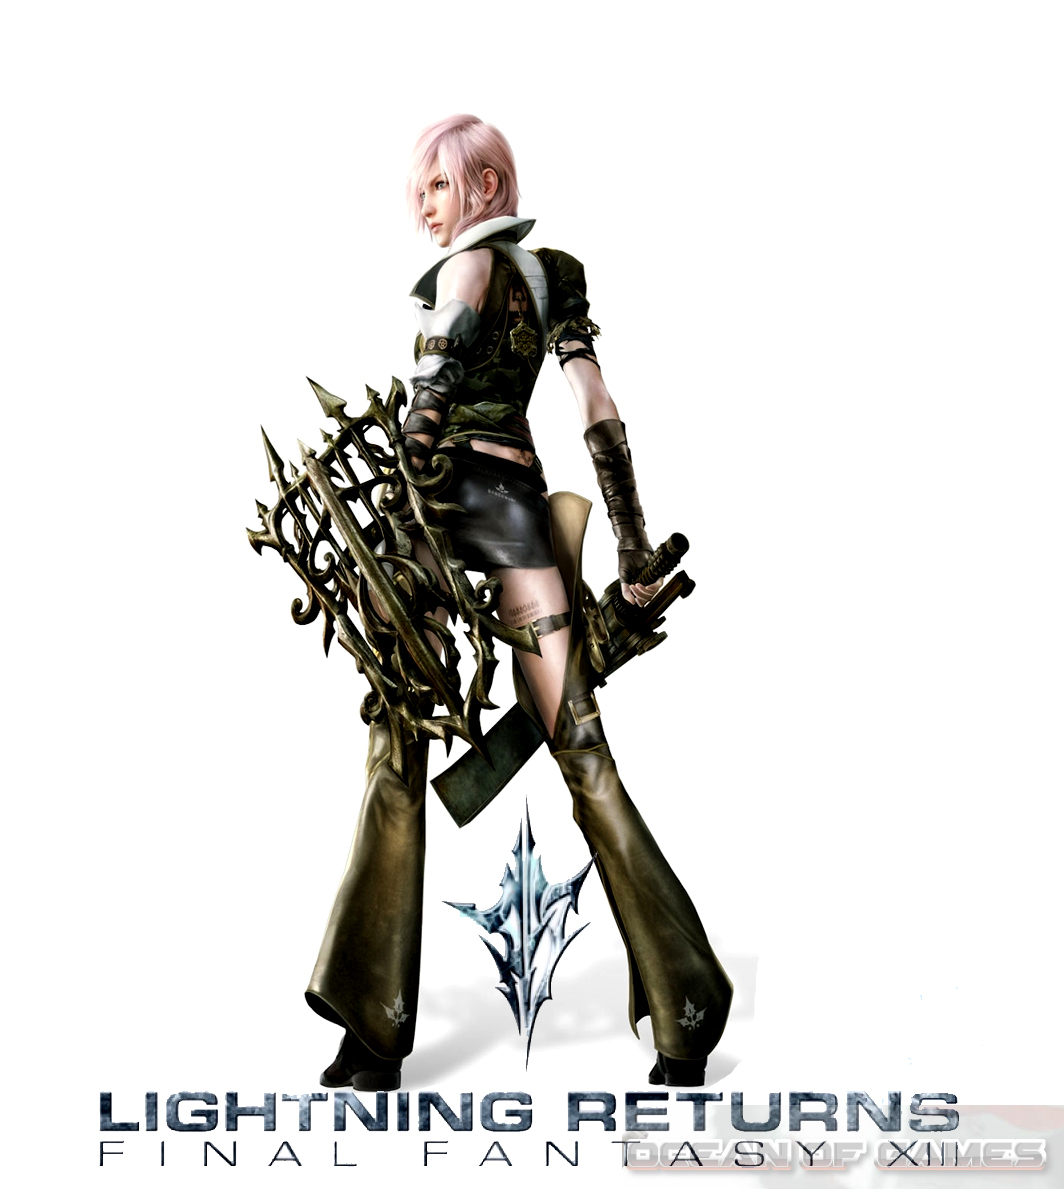 lightning returns final fantasy xiii pc download free